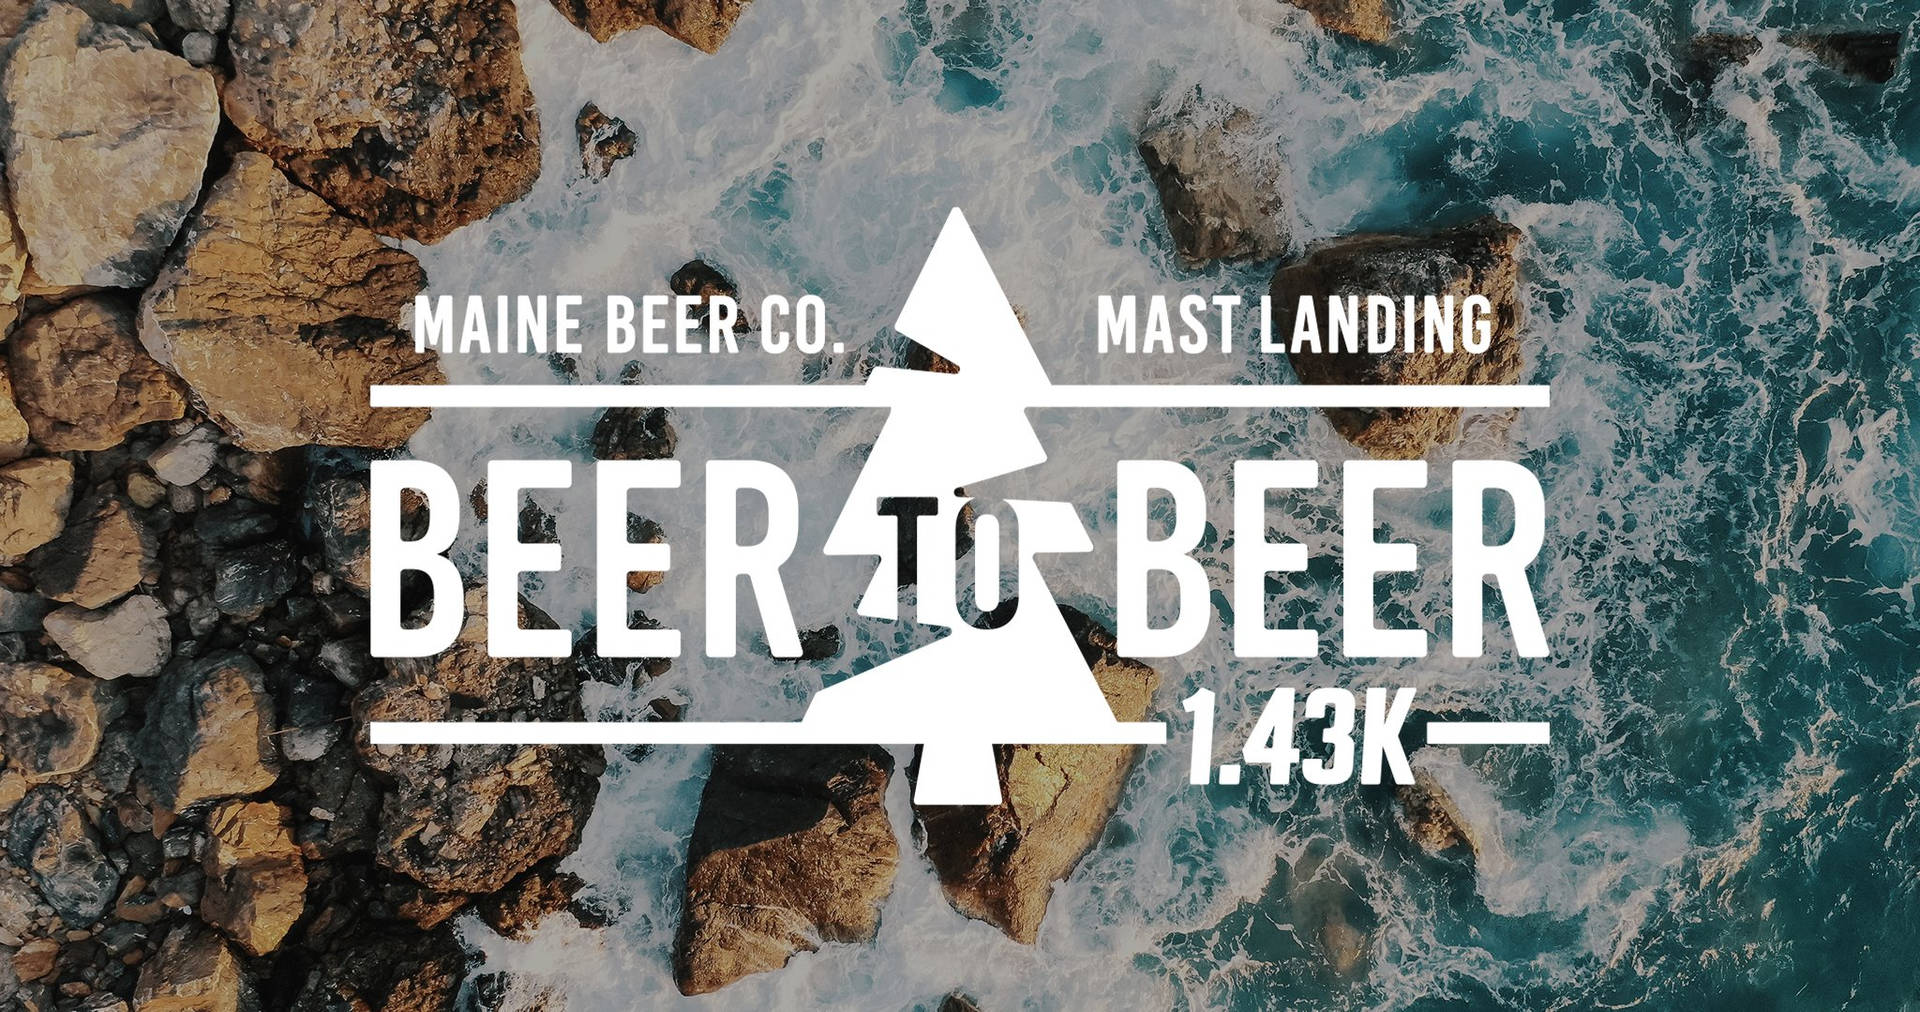 Maine Beer Company 2048 X 1079 Wallpaper